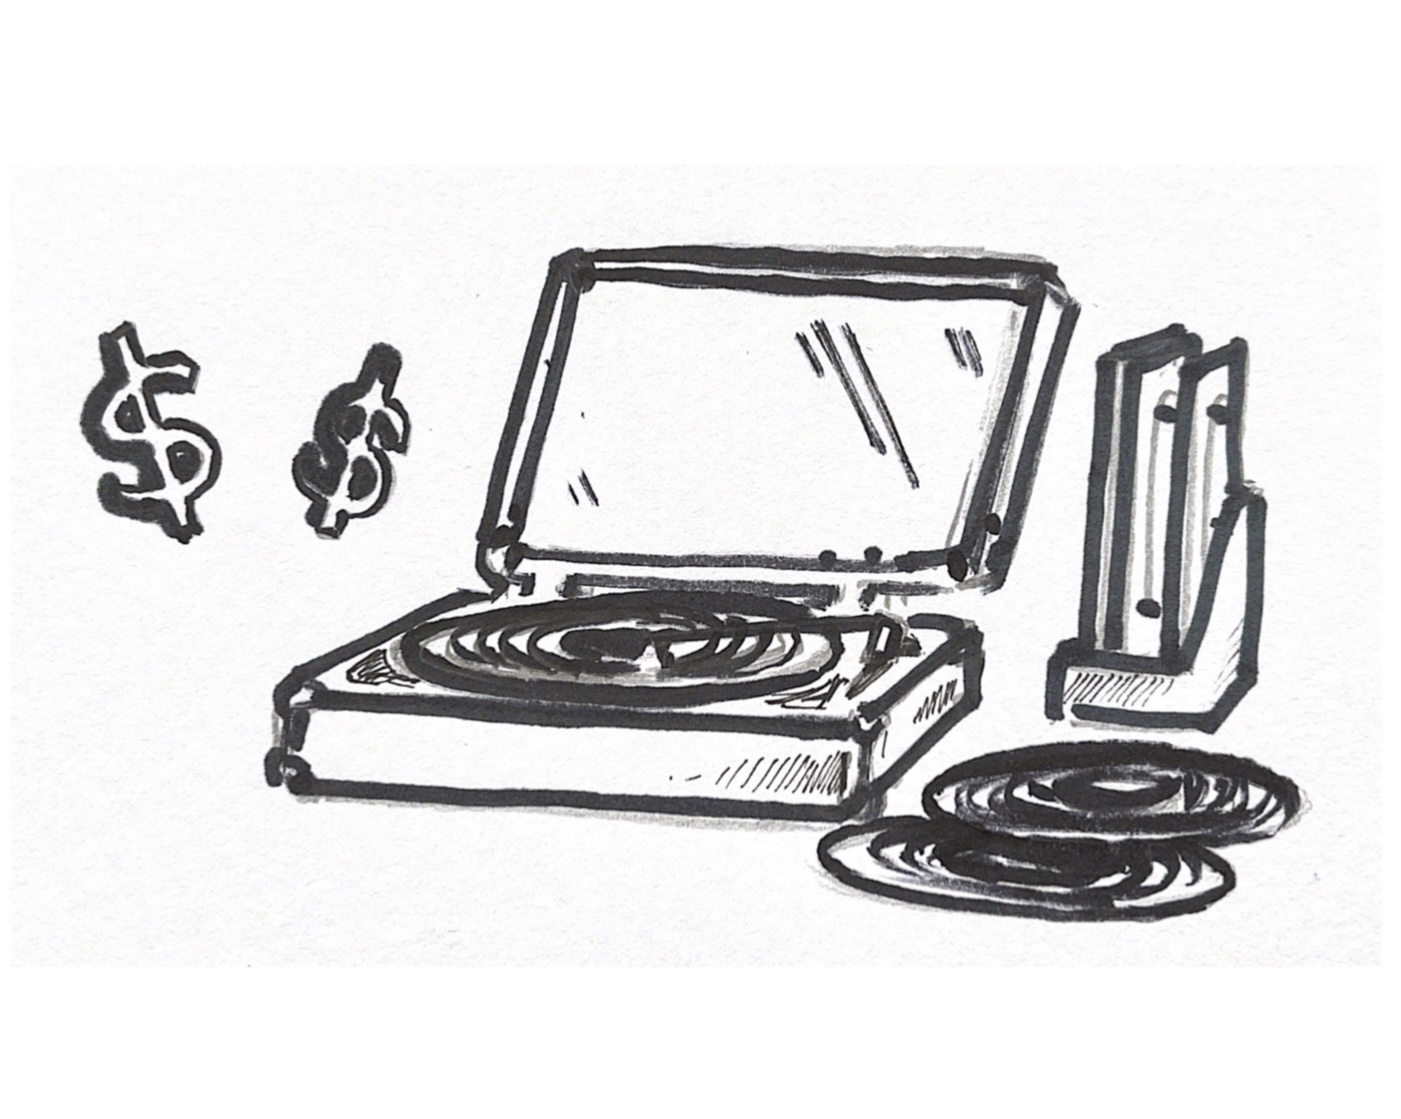 record player drawing tumblr